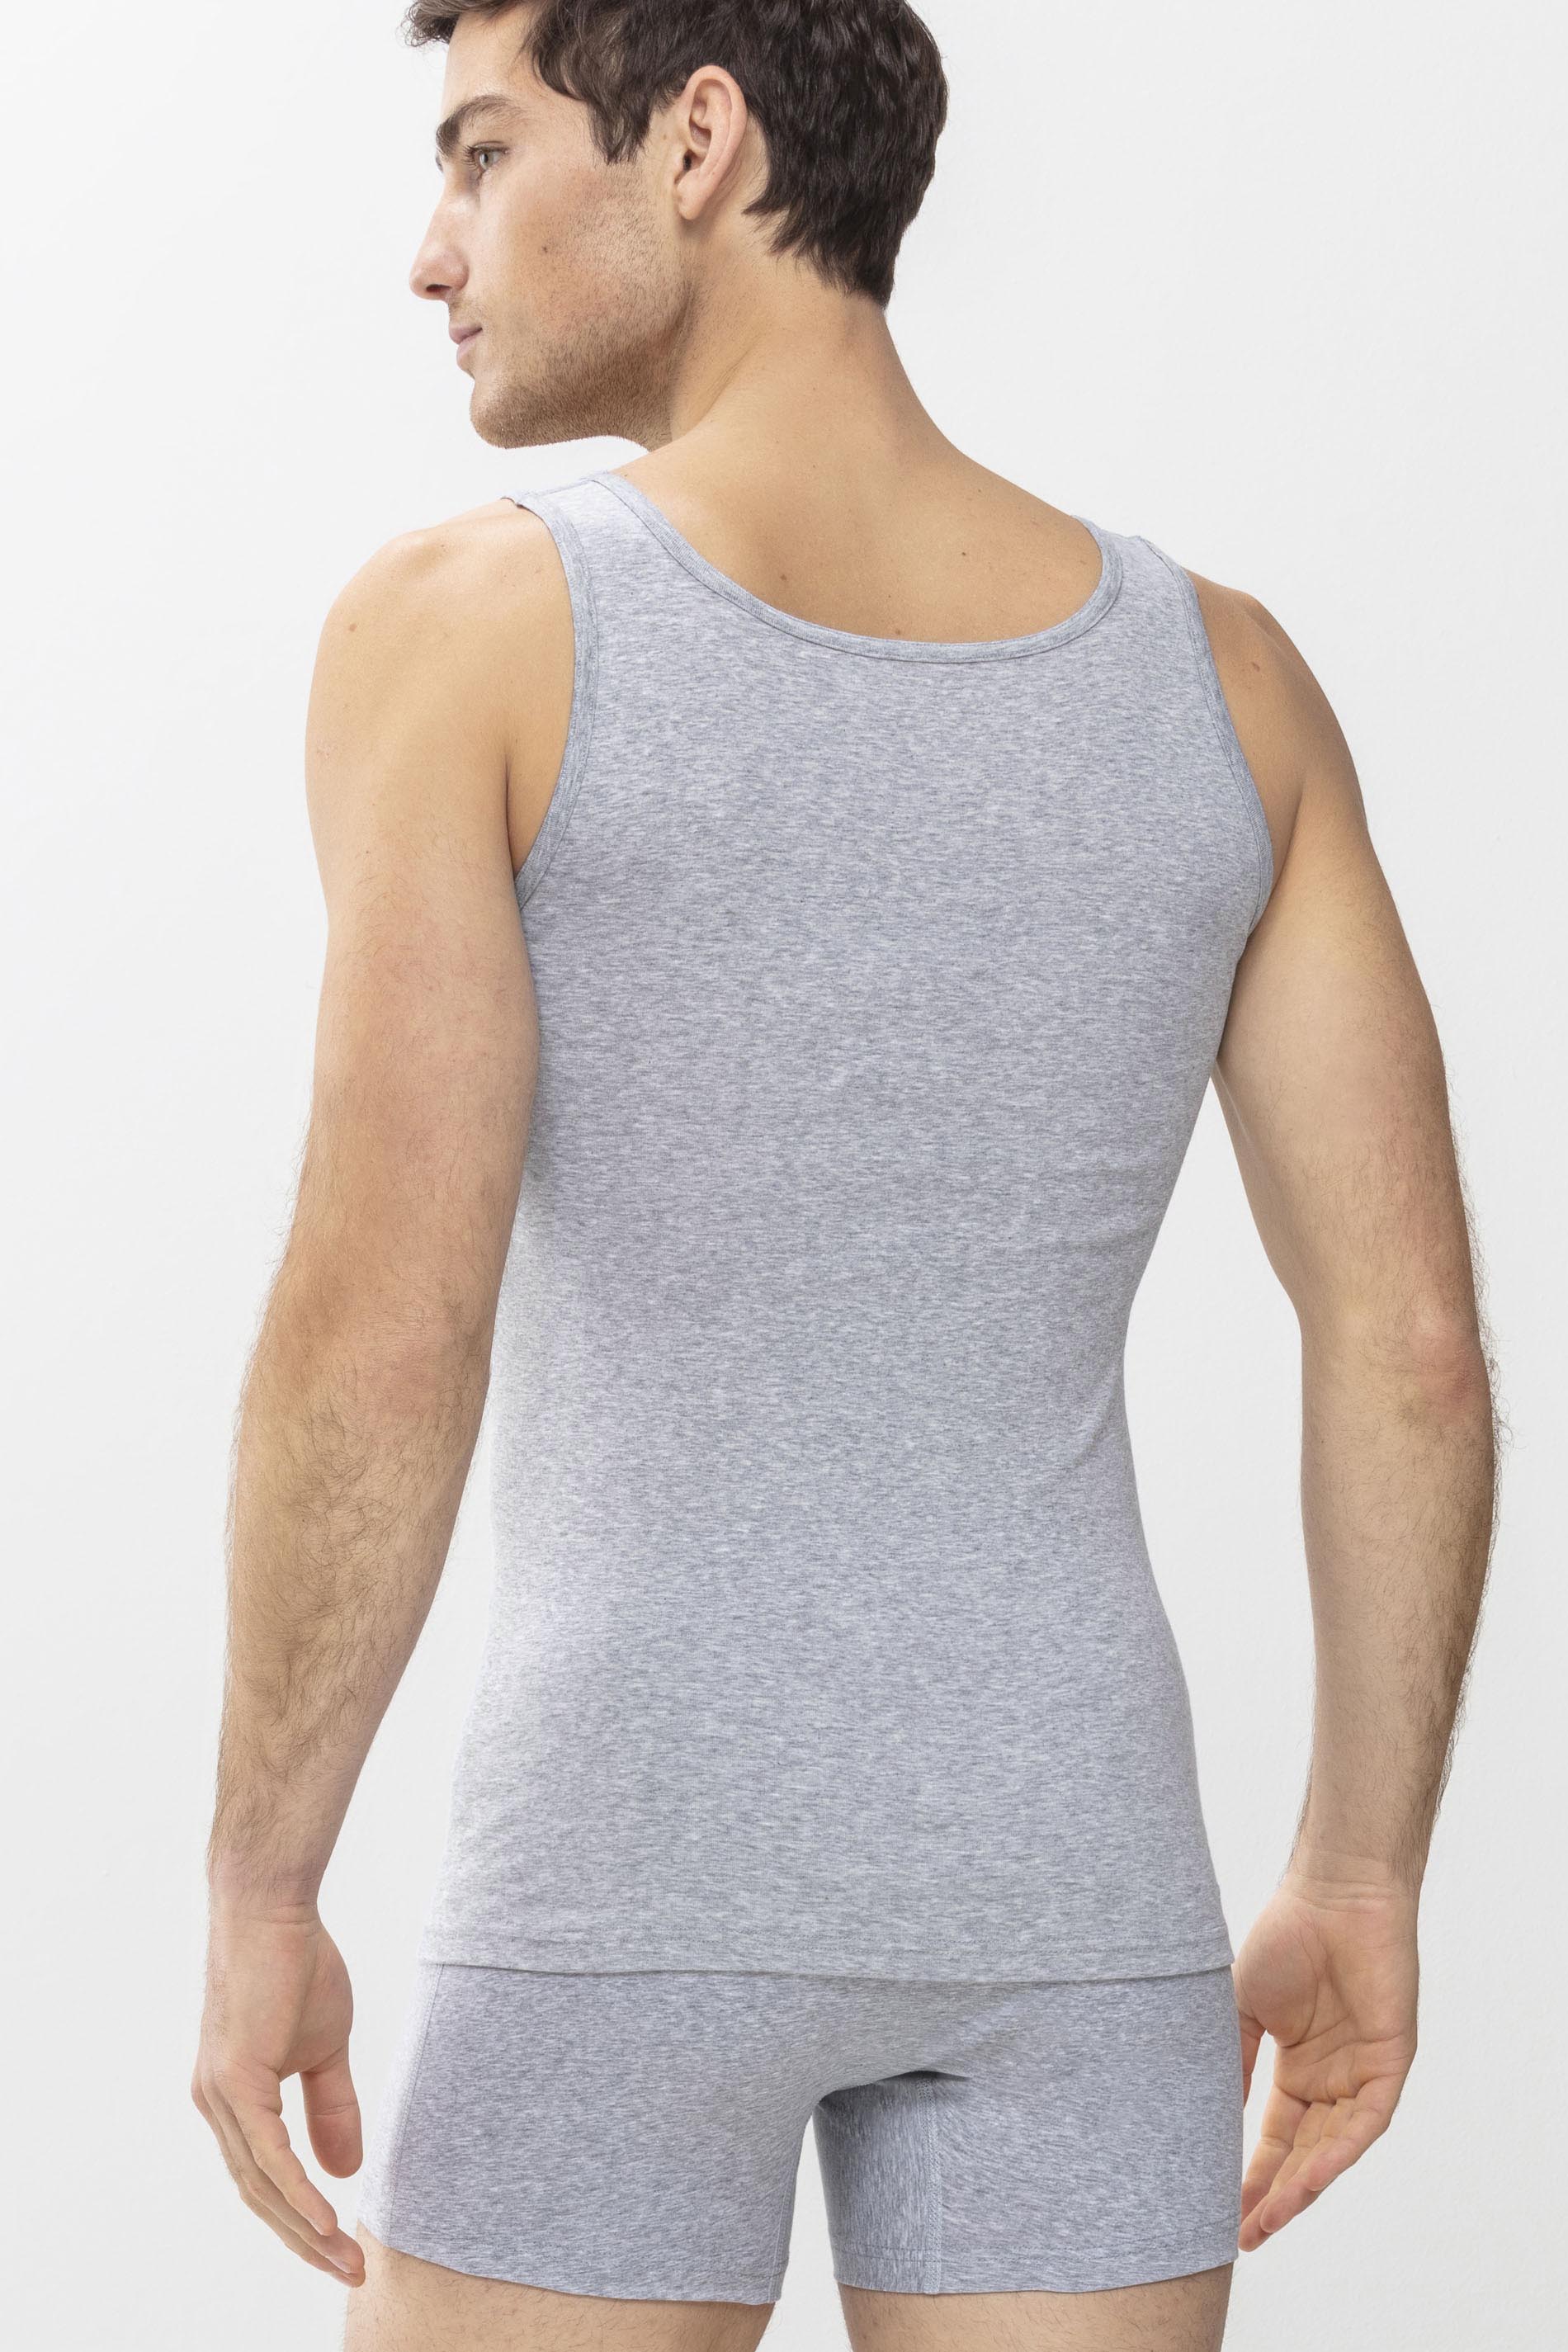 Athletic-Shirt Light Grey Melange Serie Casual Cotton Achteraanzicht | mey®